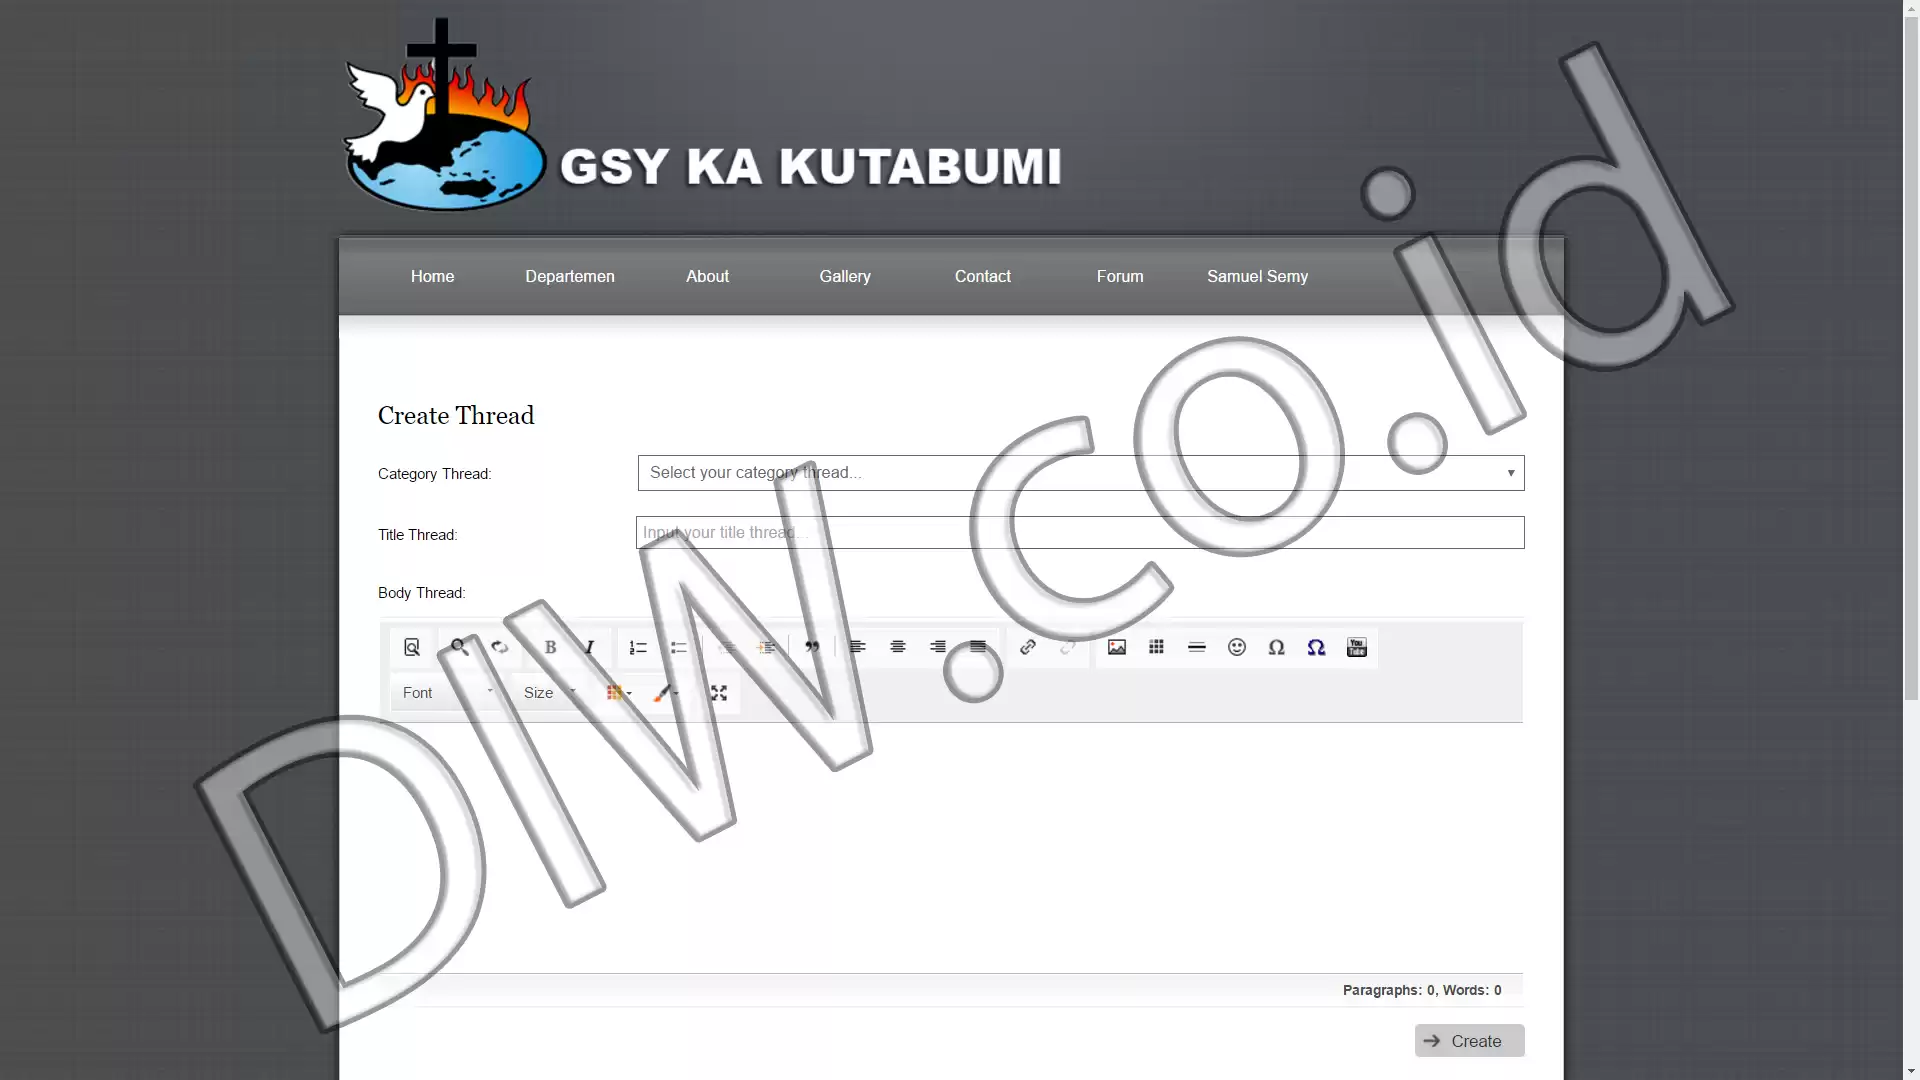 Portfolio - GSY KA Kutabumi - DIW.co.id (Digital In Website) Jasa Pembuatan Website dan Program Skripsi